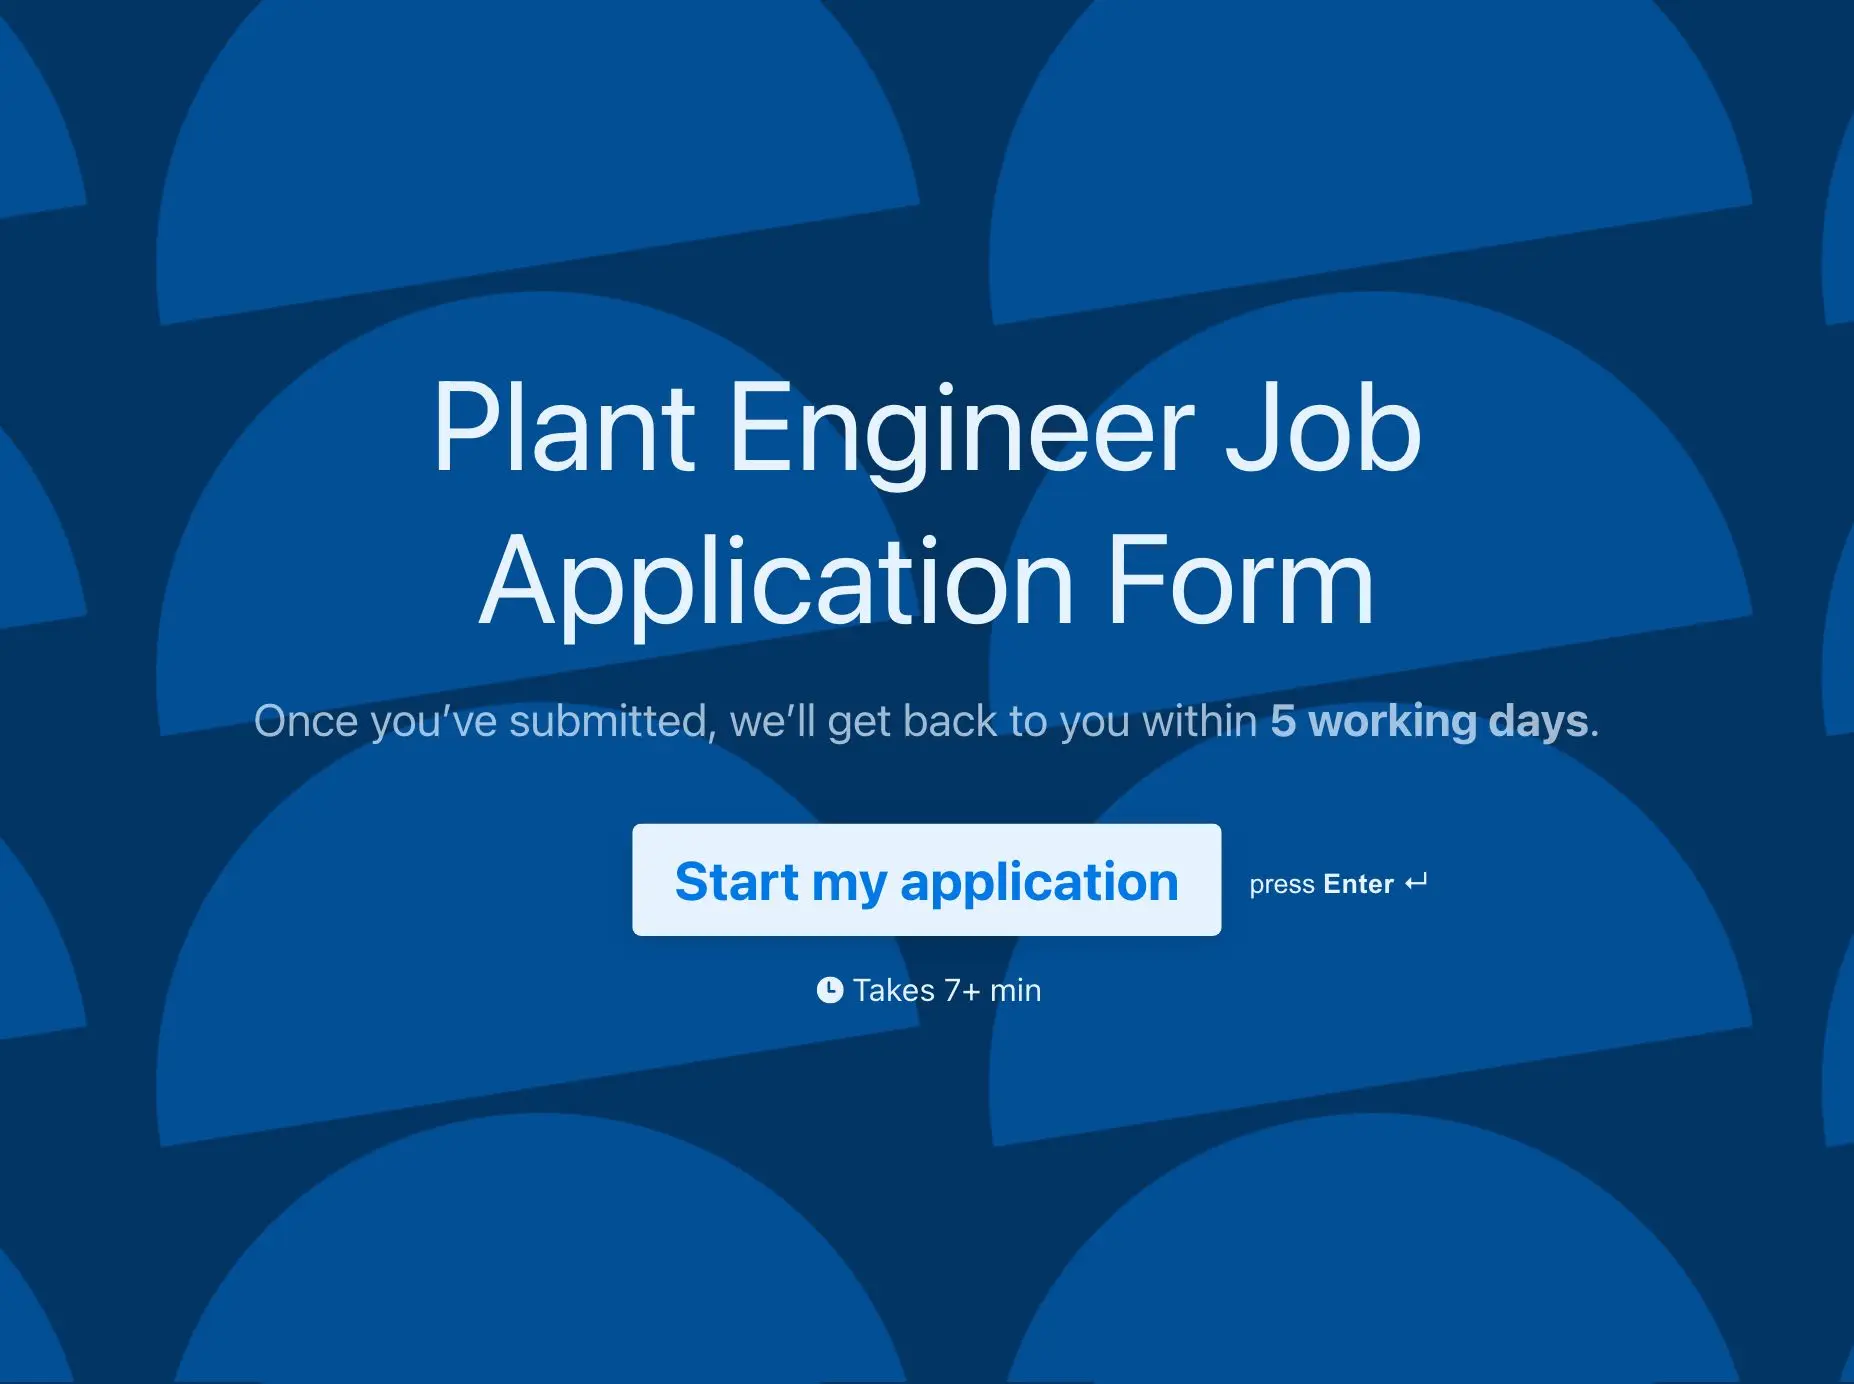 Plant Engineer Job Application Form Template Hero